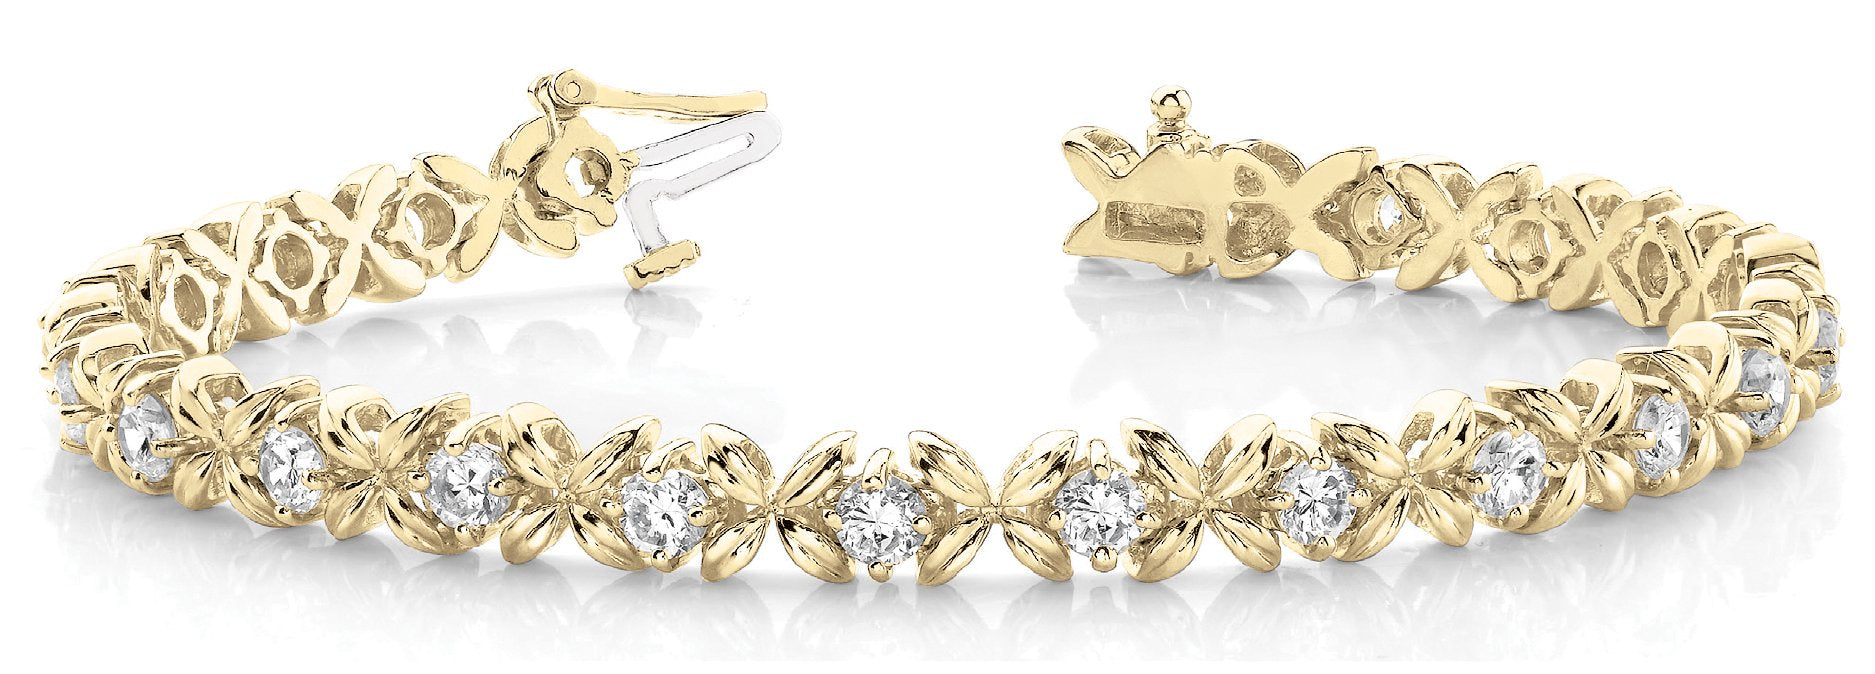 Fancy Diamond Bracelet Ladies 3.12ct tw - 14kt Yellow Gold